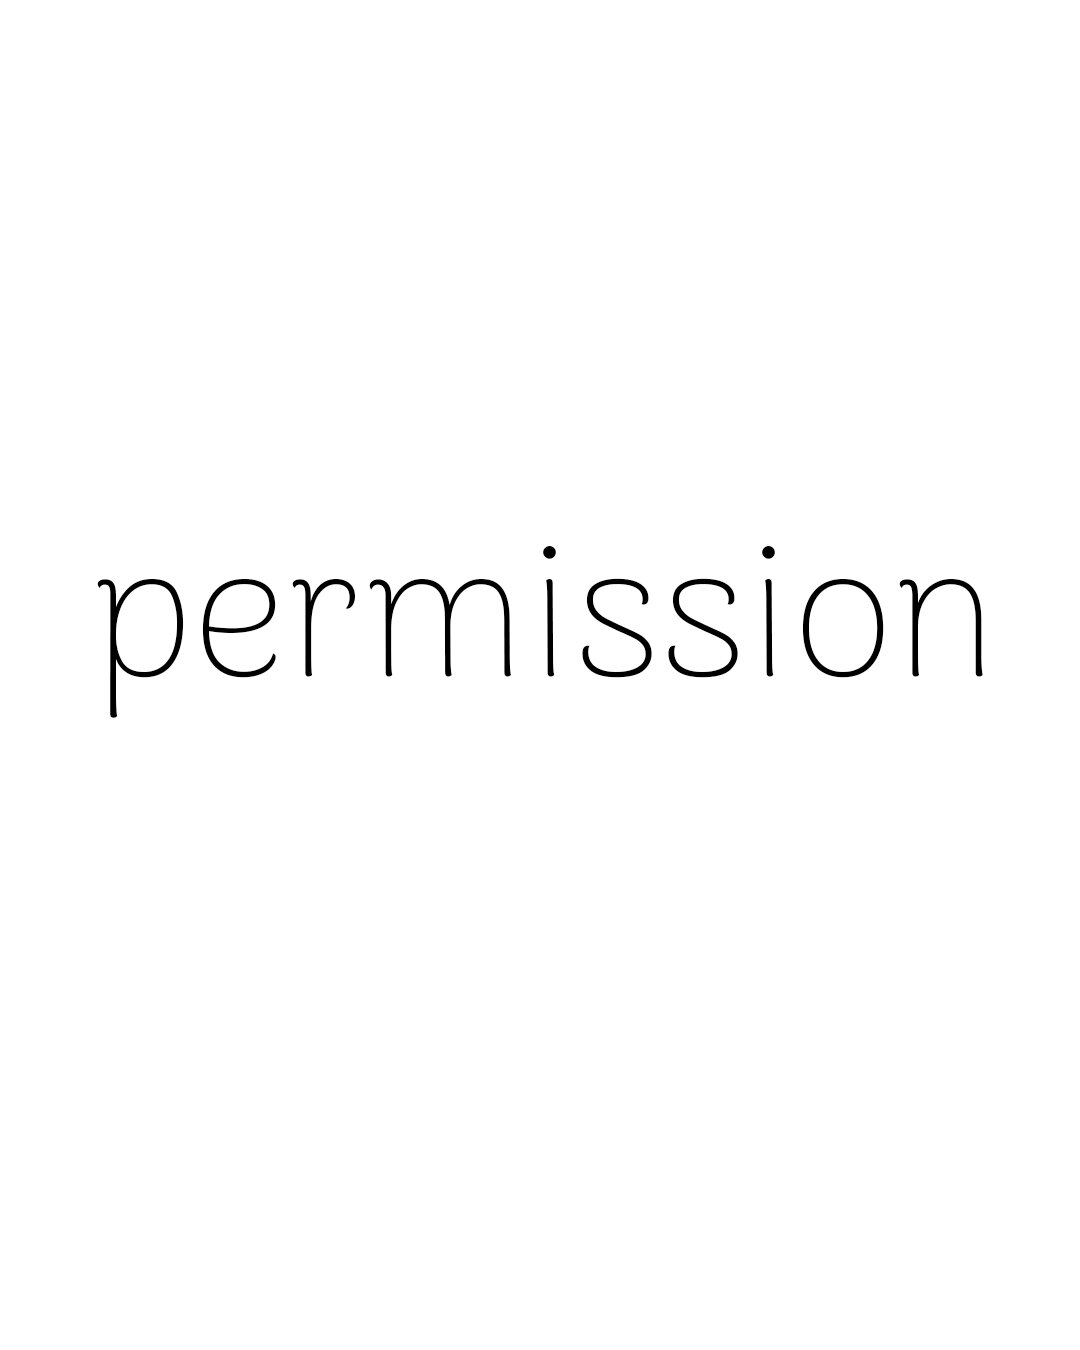 permission.jpg